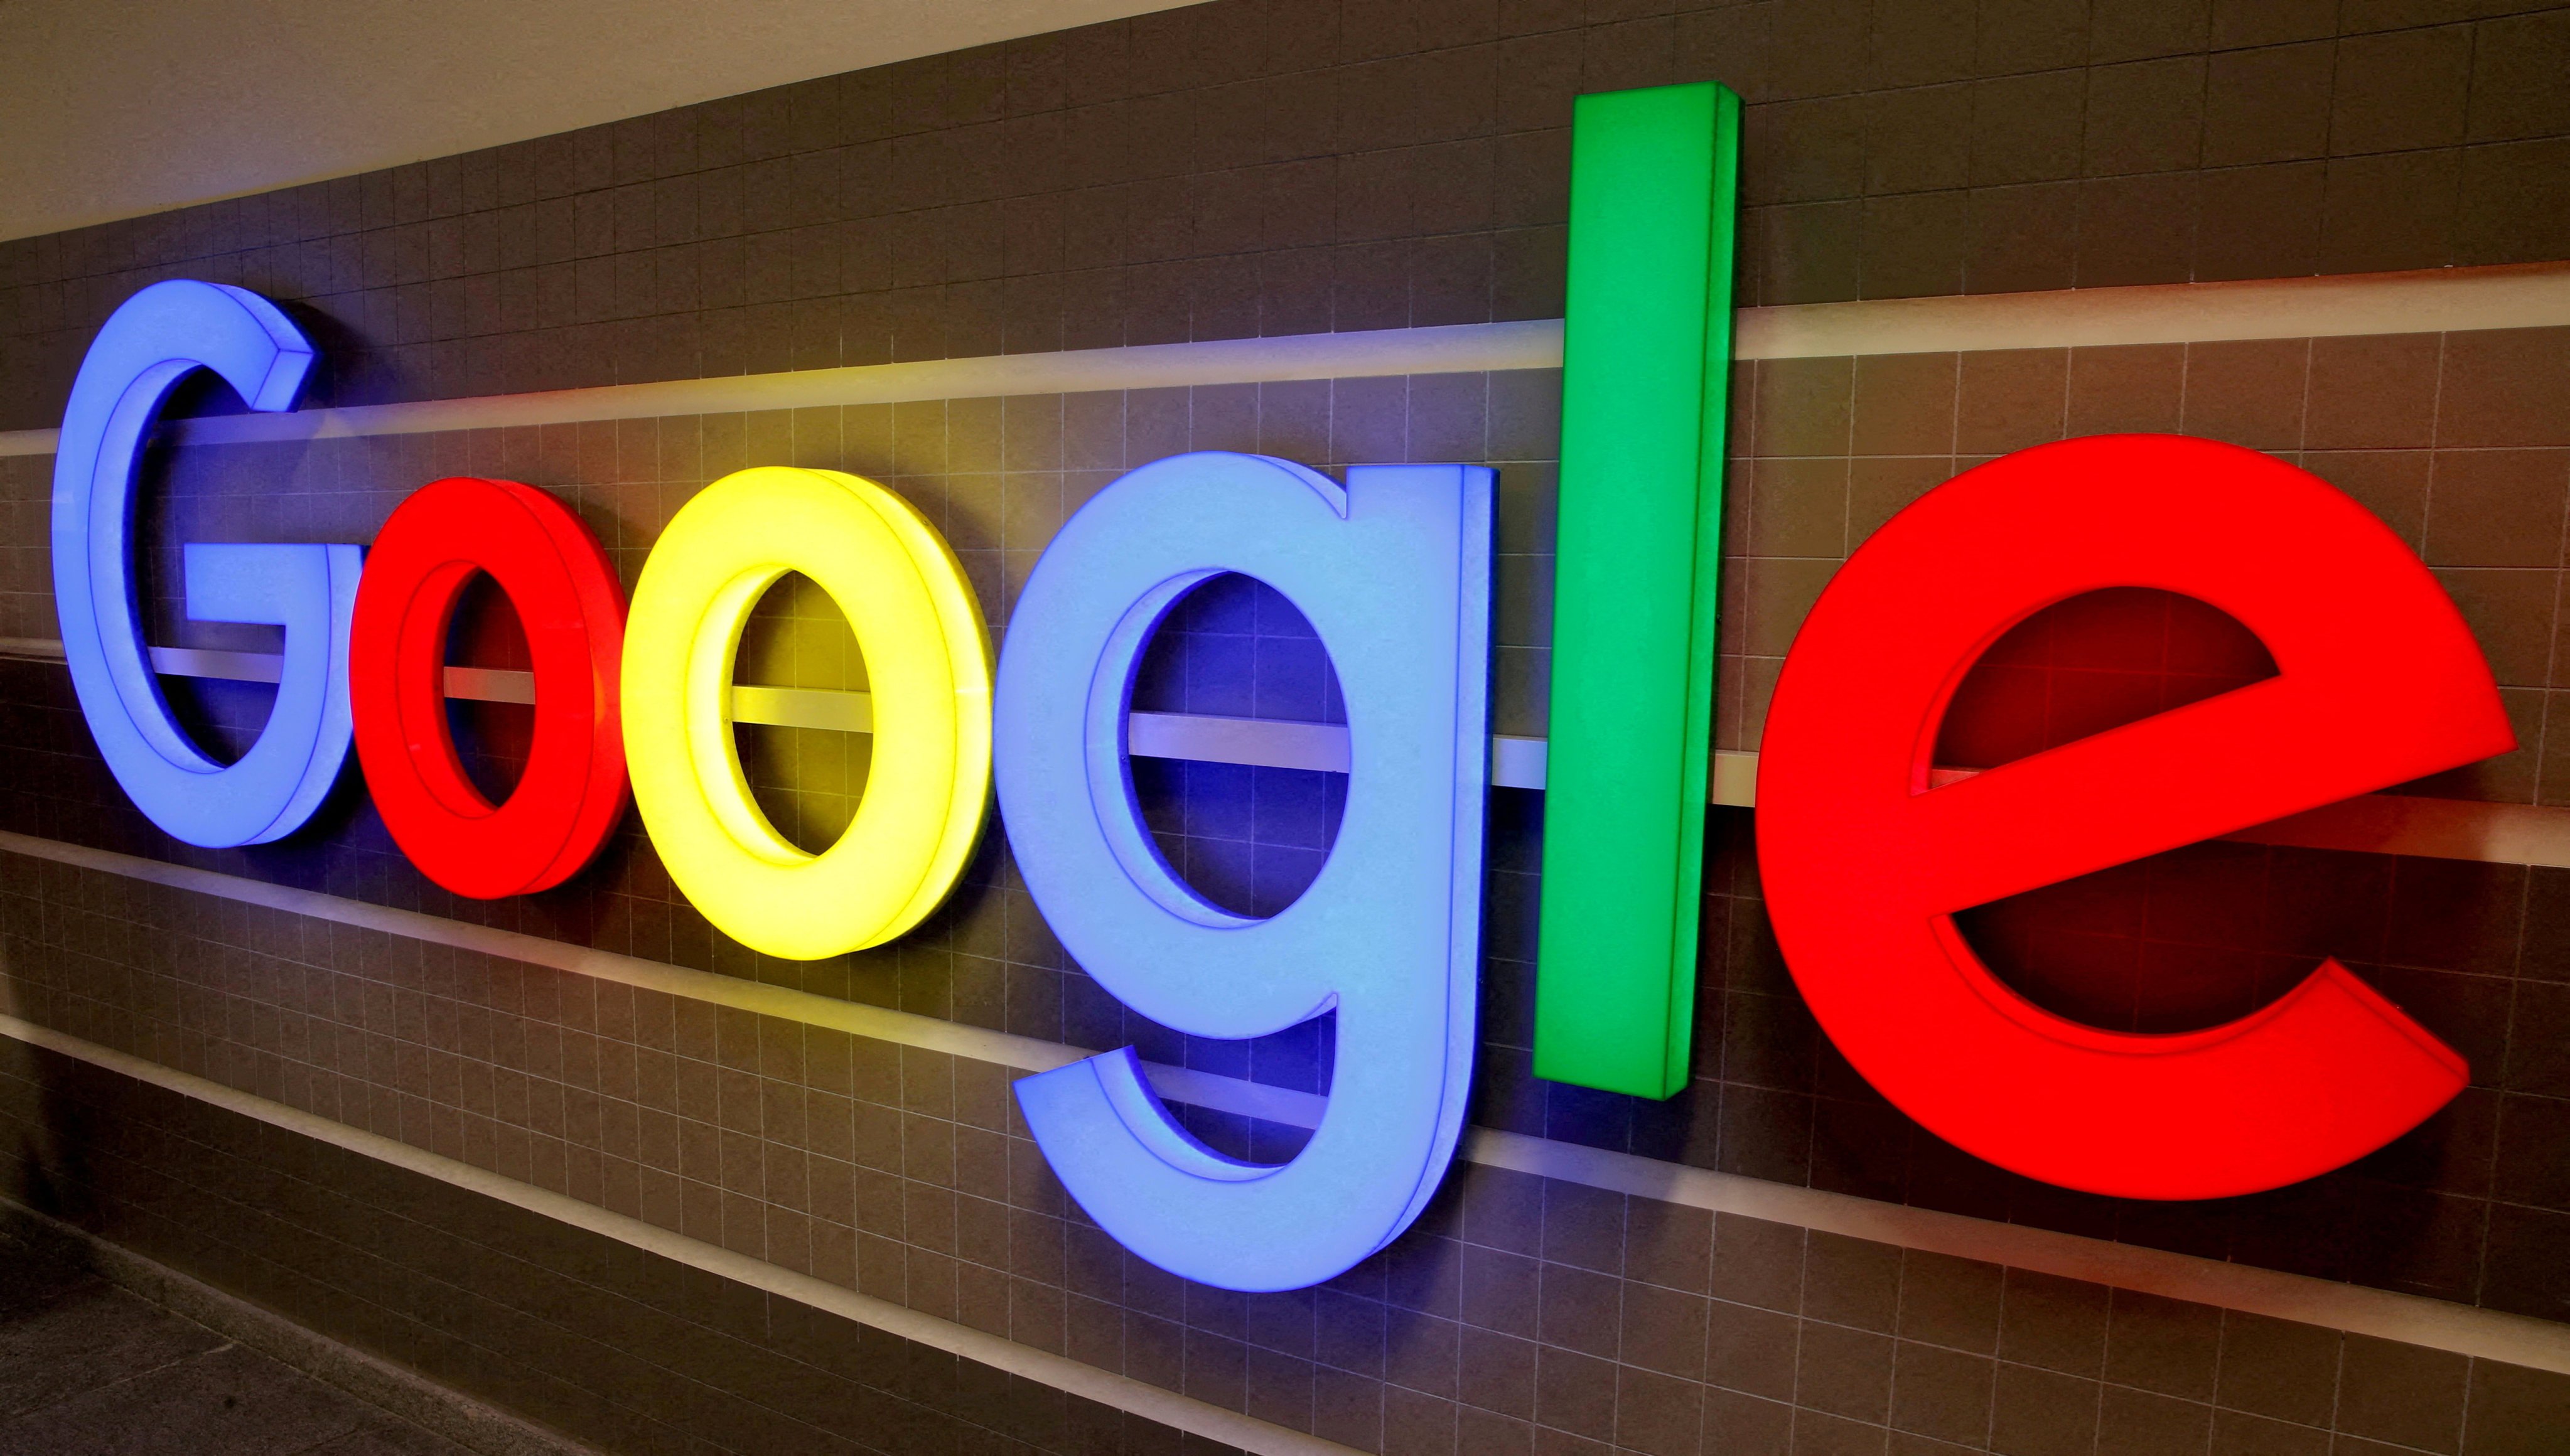 An illuminated Google logo seen inside an office building in Zurich, Switzerland, on December 5, 2018. Photo: Reuters